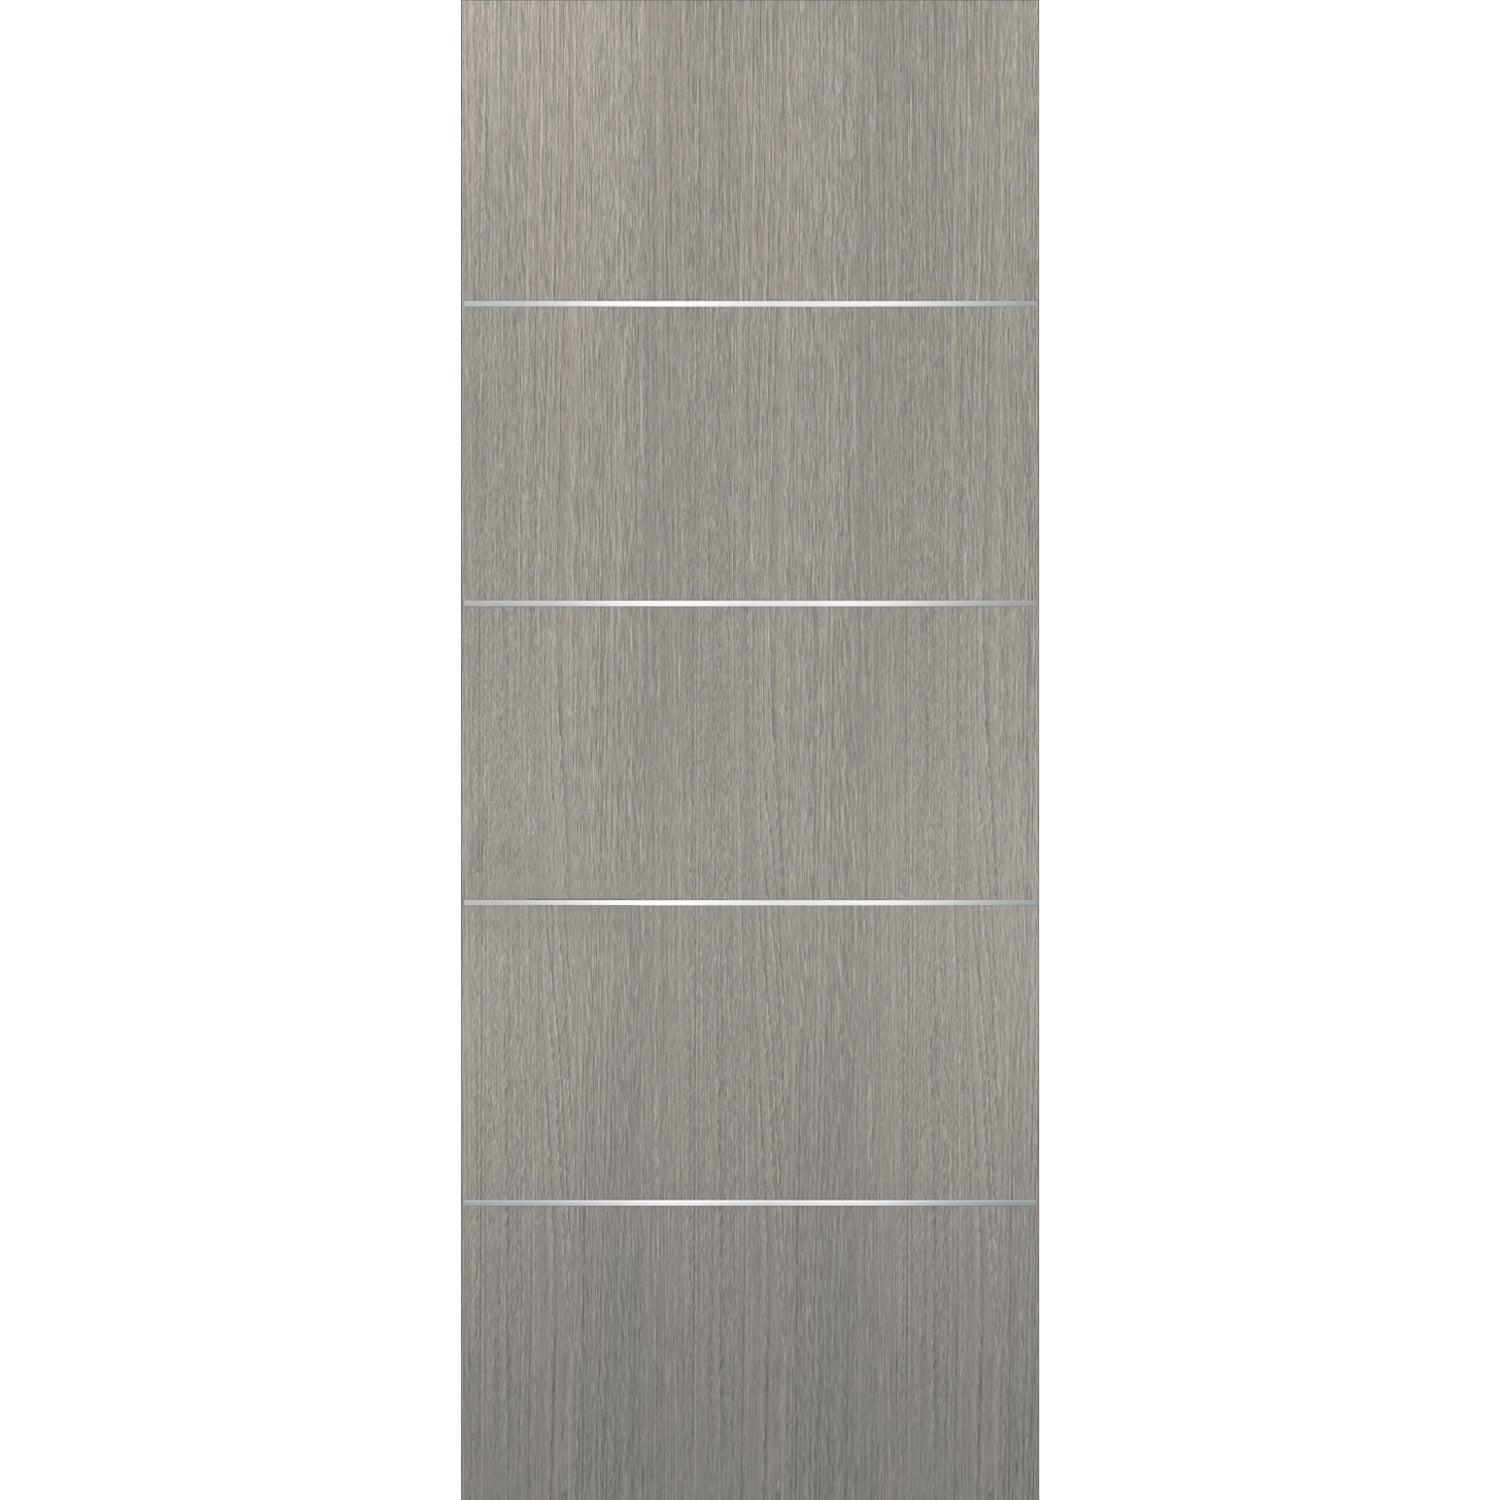 SARTODOORS Slab Barn Door Panel 36 x 96 | Planum 0020 Grey Oak | Flush Doors | Pocket Sliding